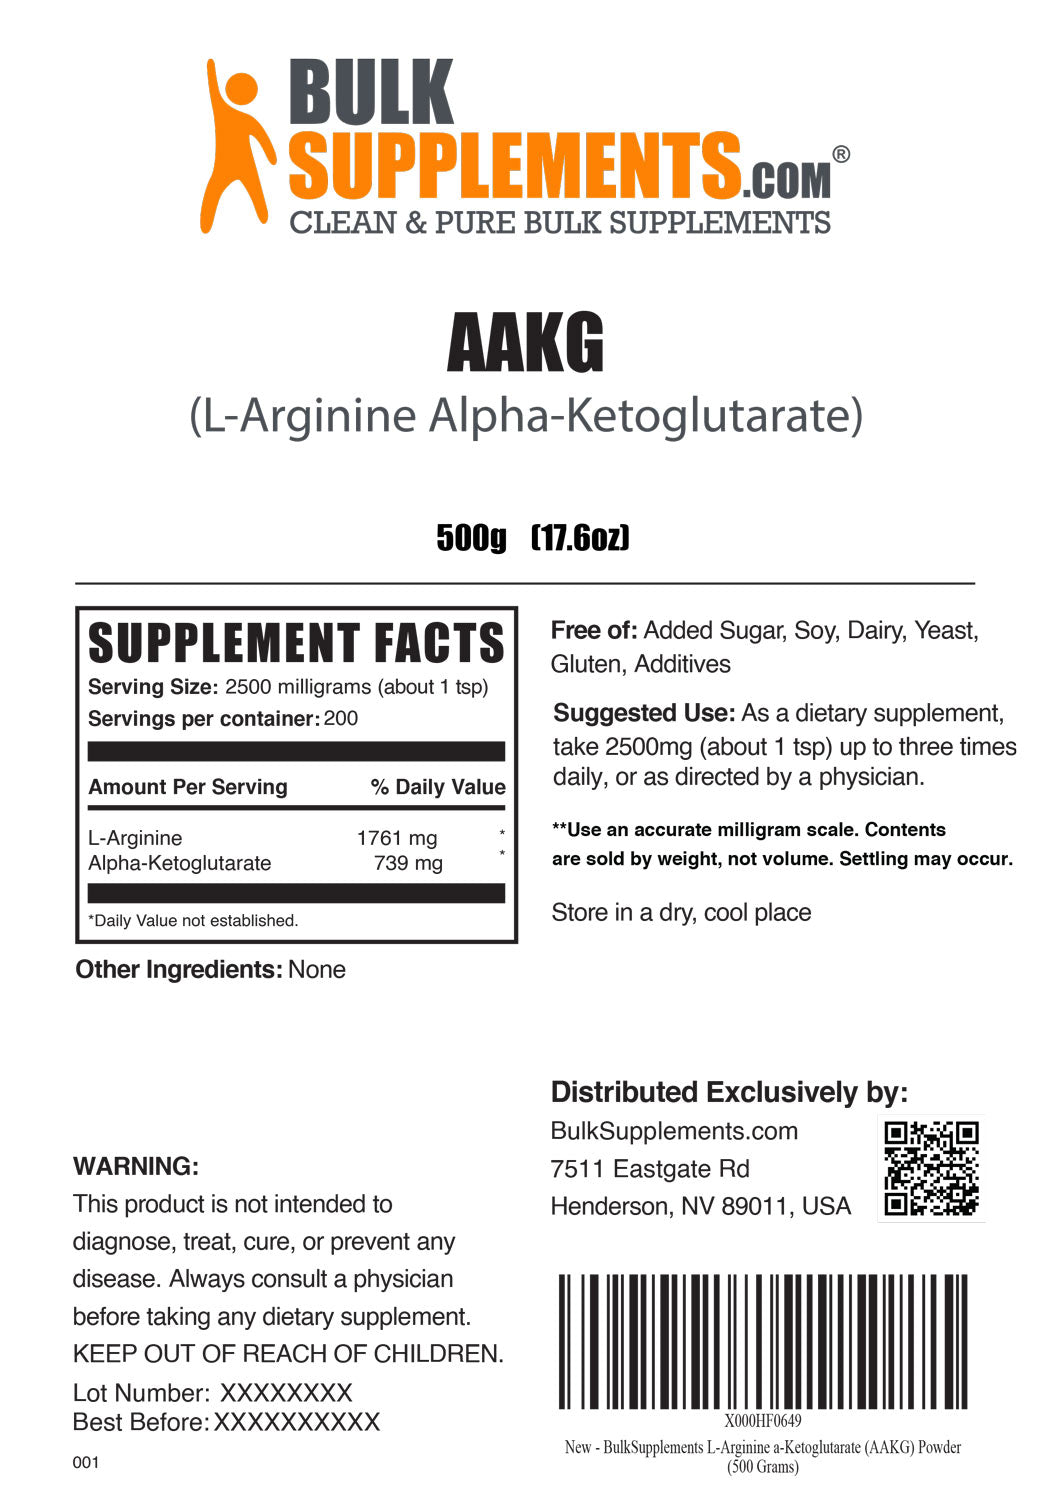 AAKG Arginine Supplement Facts, 500g bag